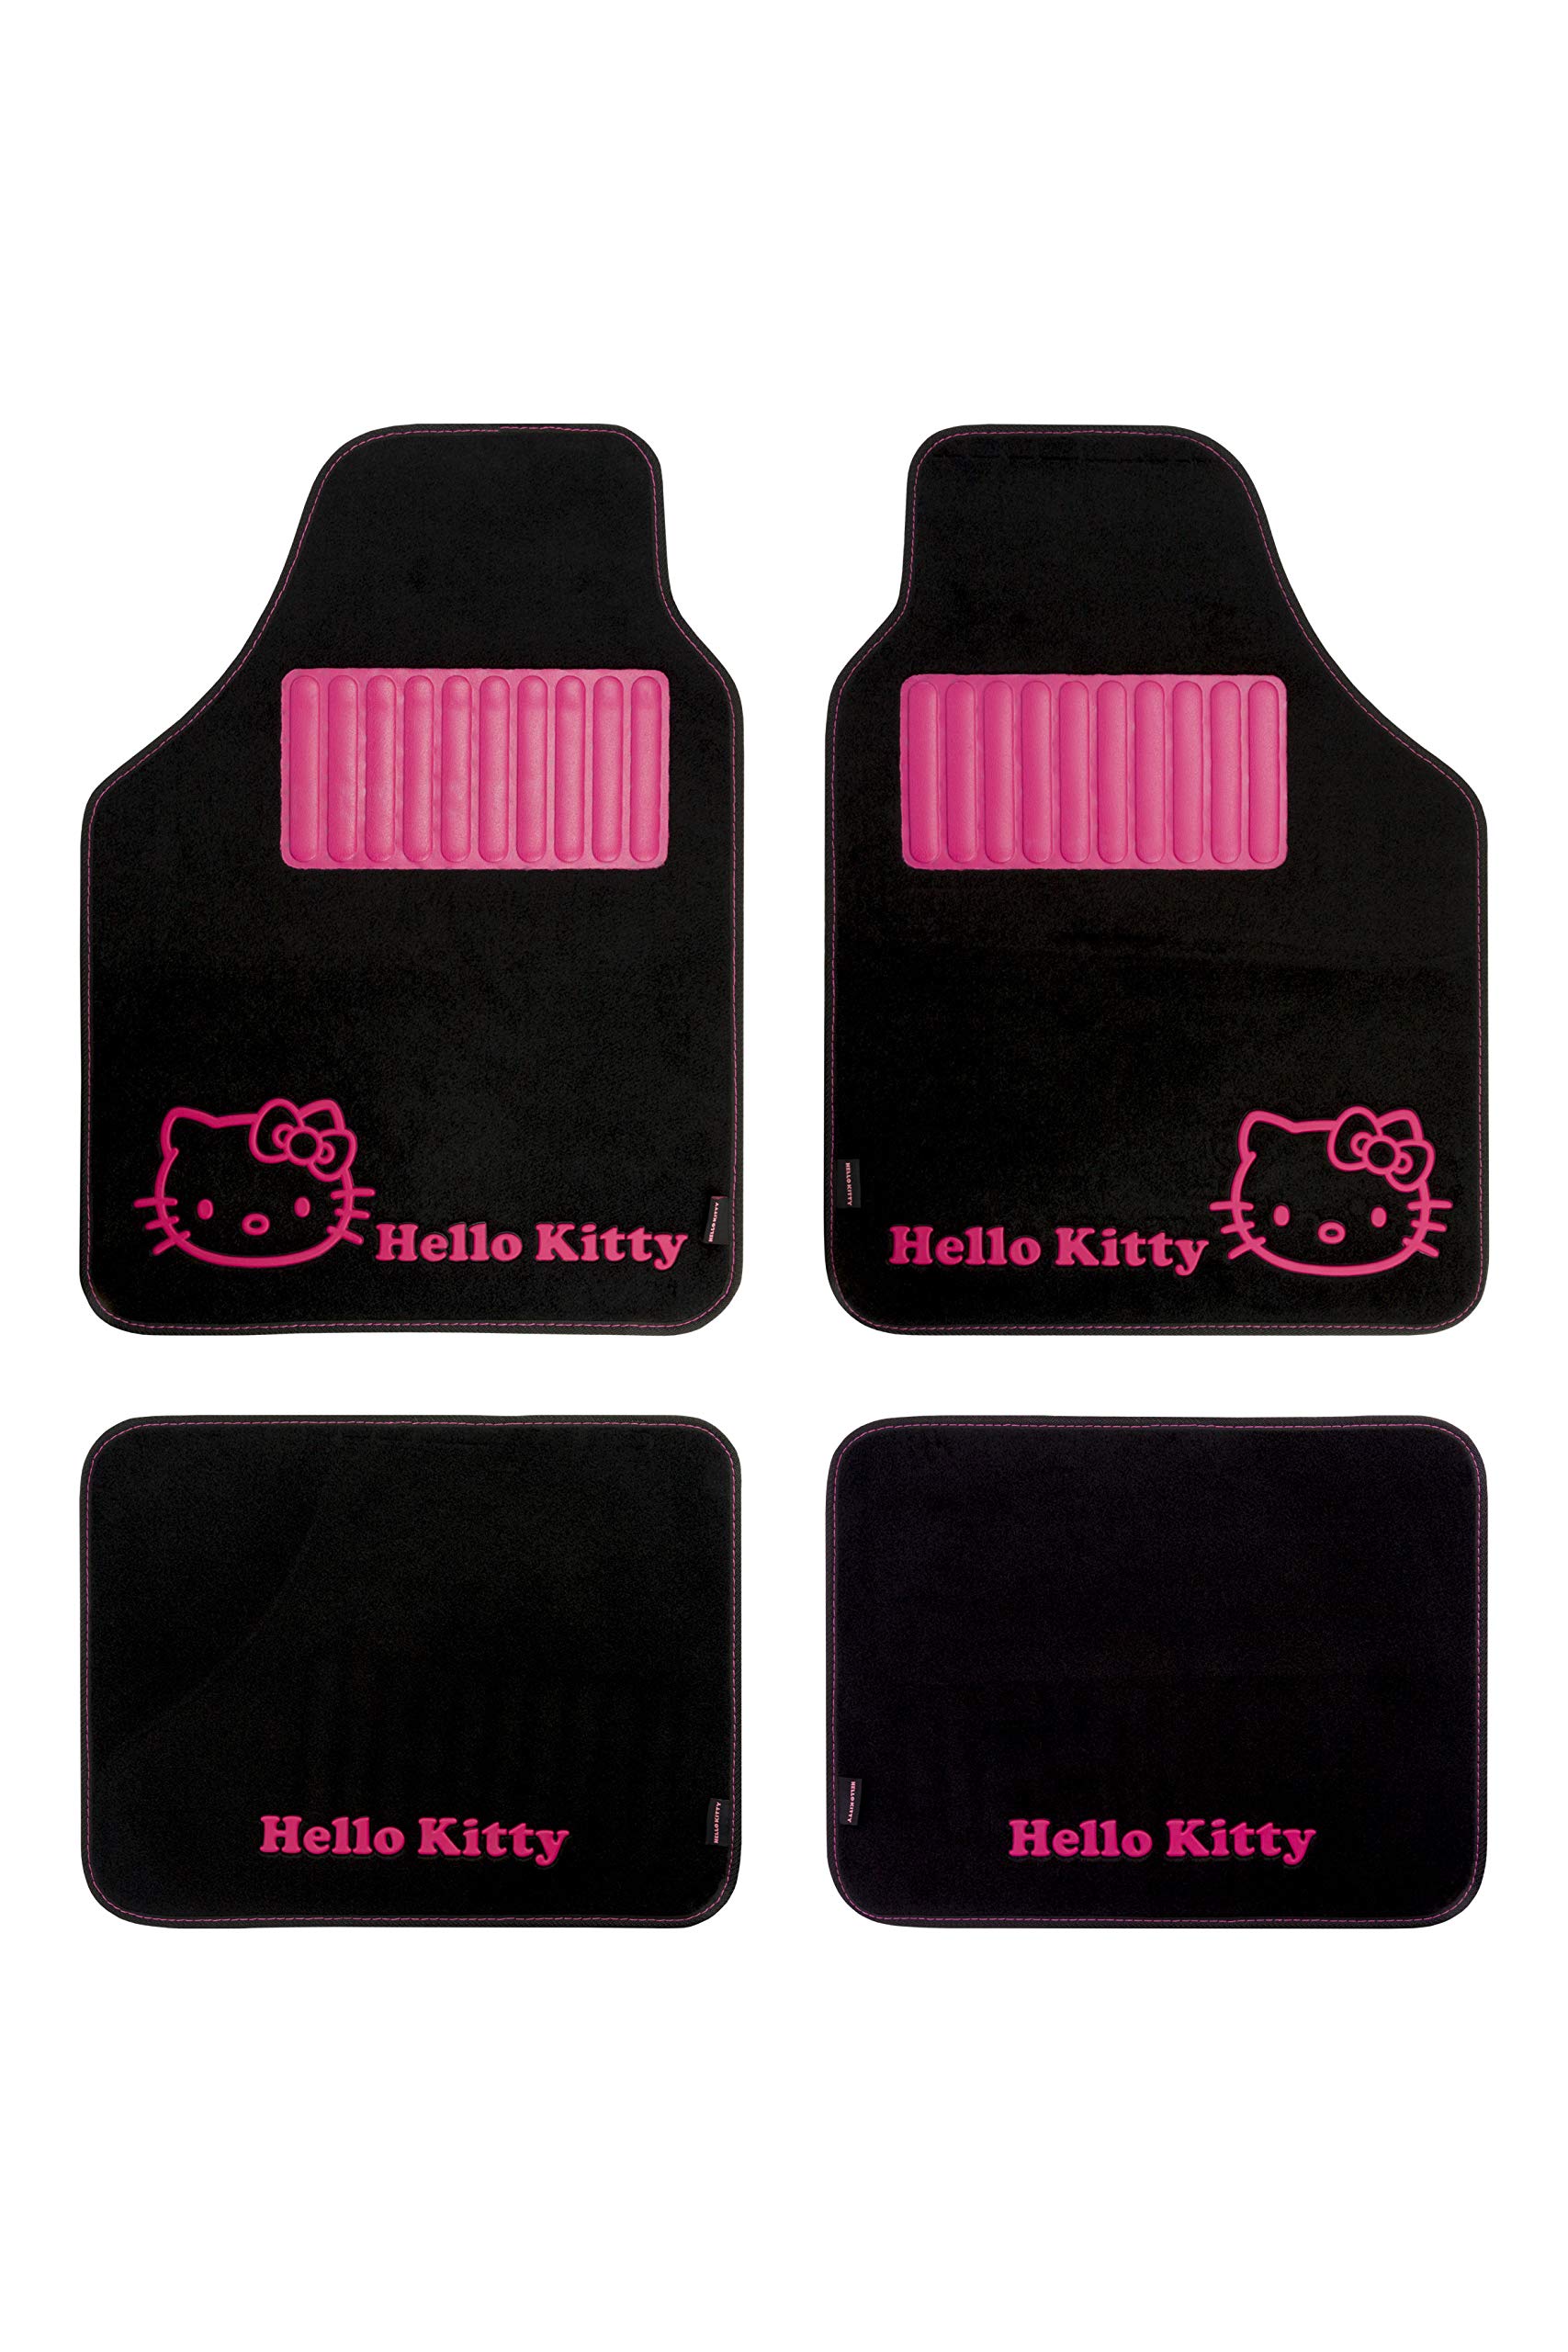 HELLO KITTY KIT3013 Fussmatten Schwarz Farbe, Set of 4, schwarz von Hello Kitty